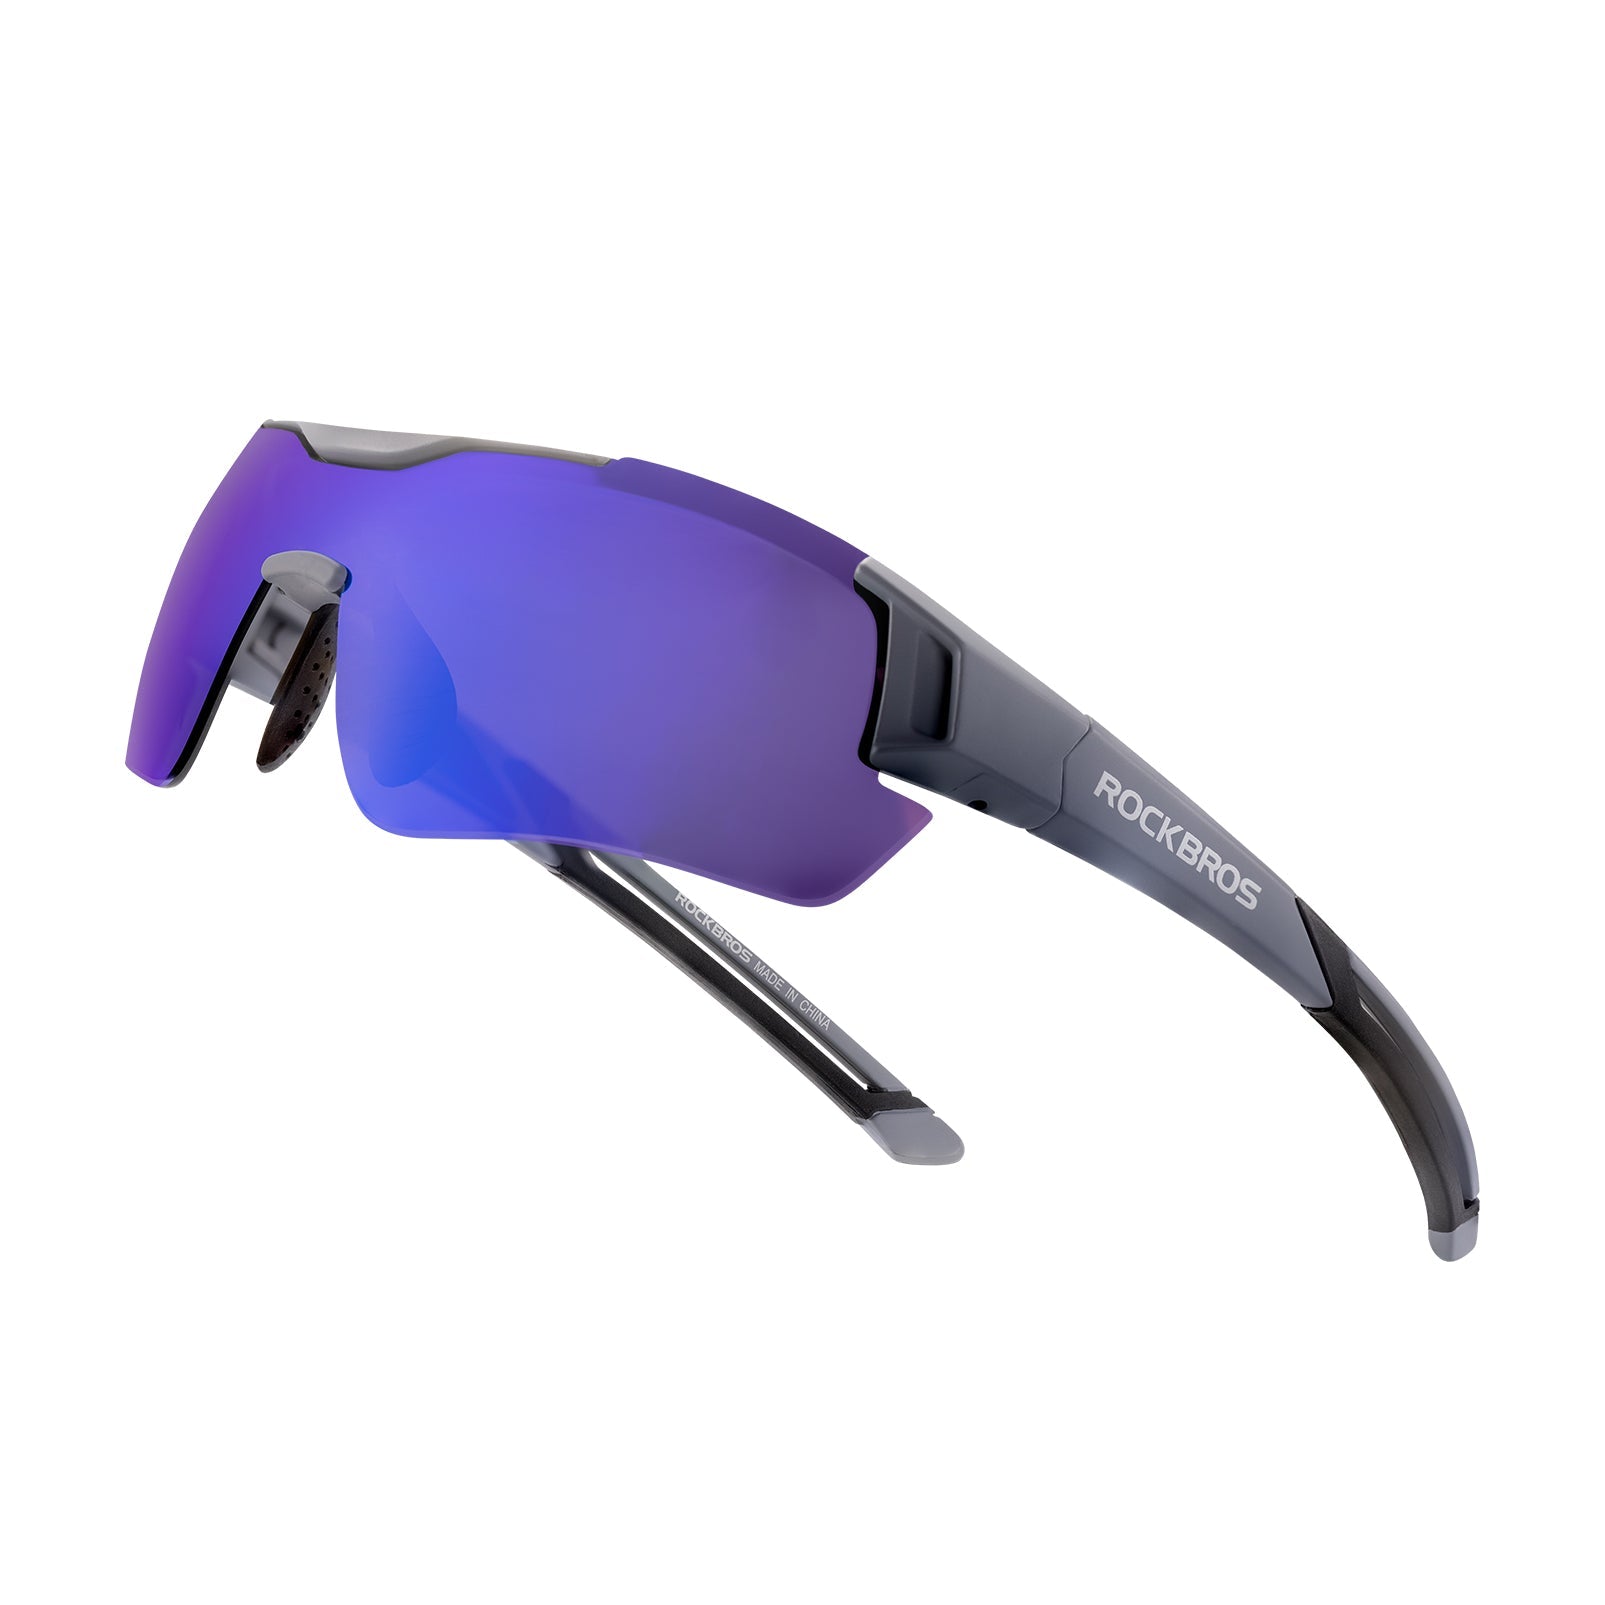 ROCKBROS Polarised Sunglasses for Men Cycling Sunglasses UV Protection